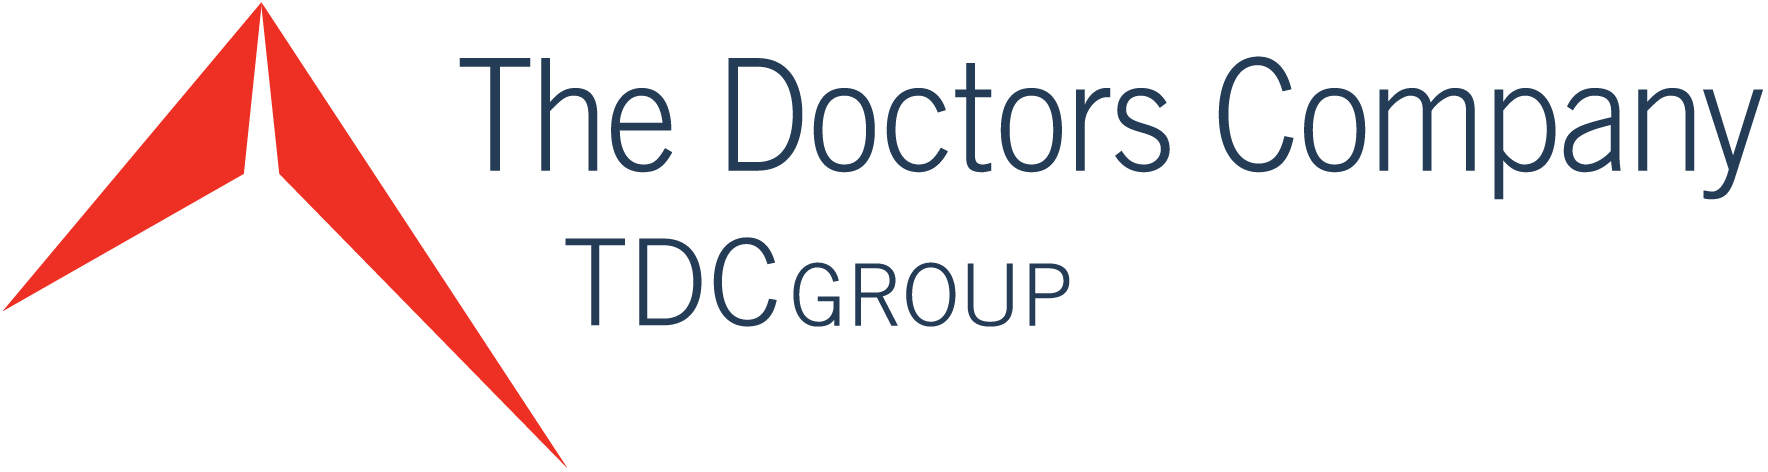 The Doctors Company Logo